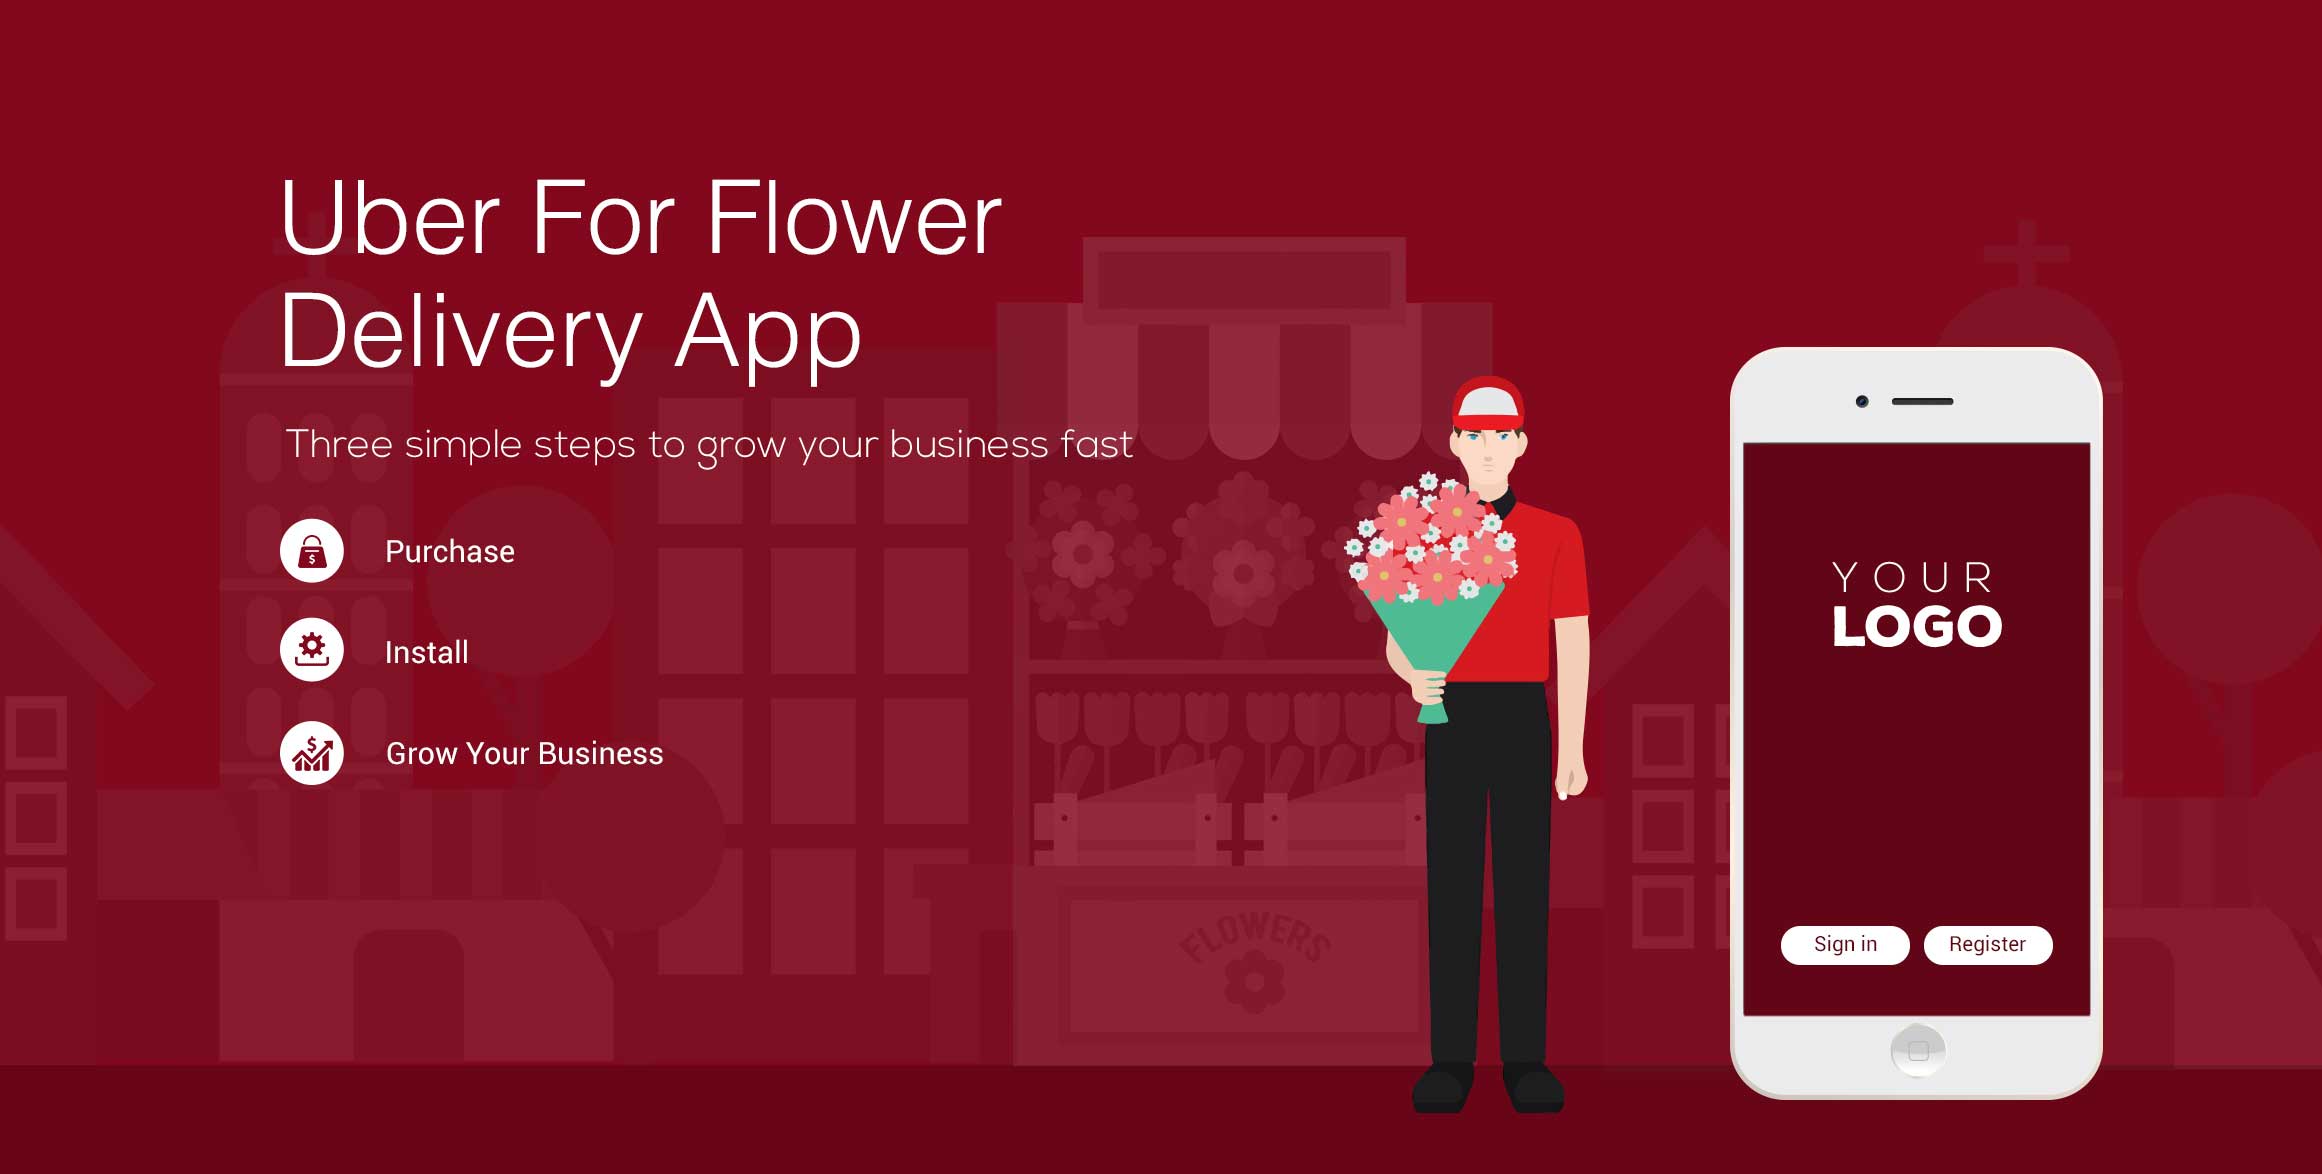 https://www.elluminatiinc.com/uber-for-flower-delivery/ website snapshot